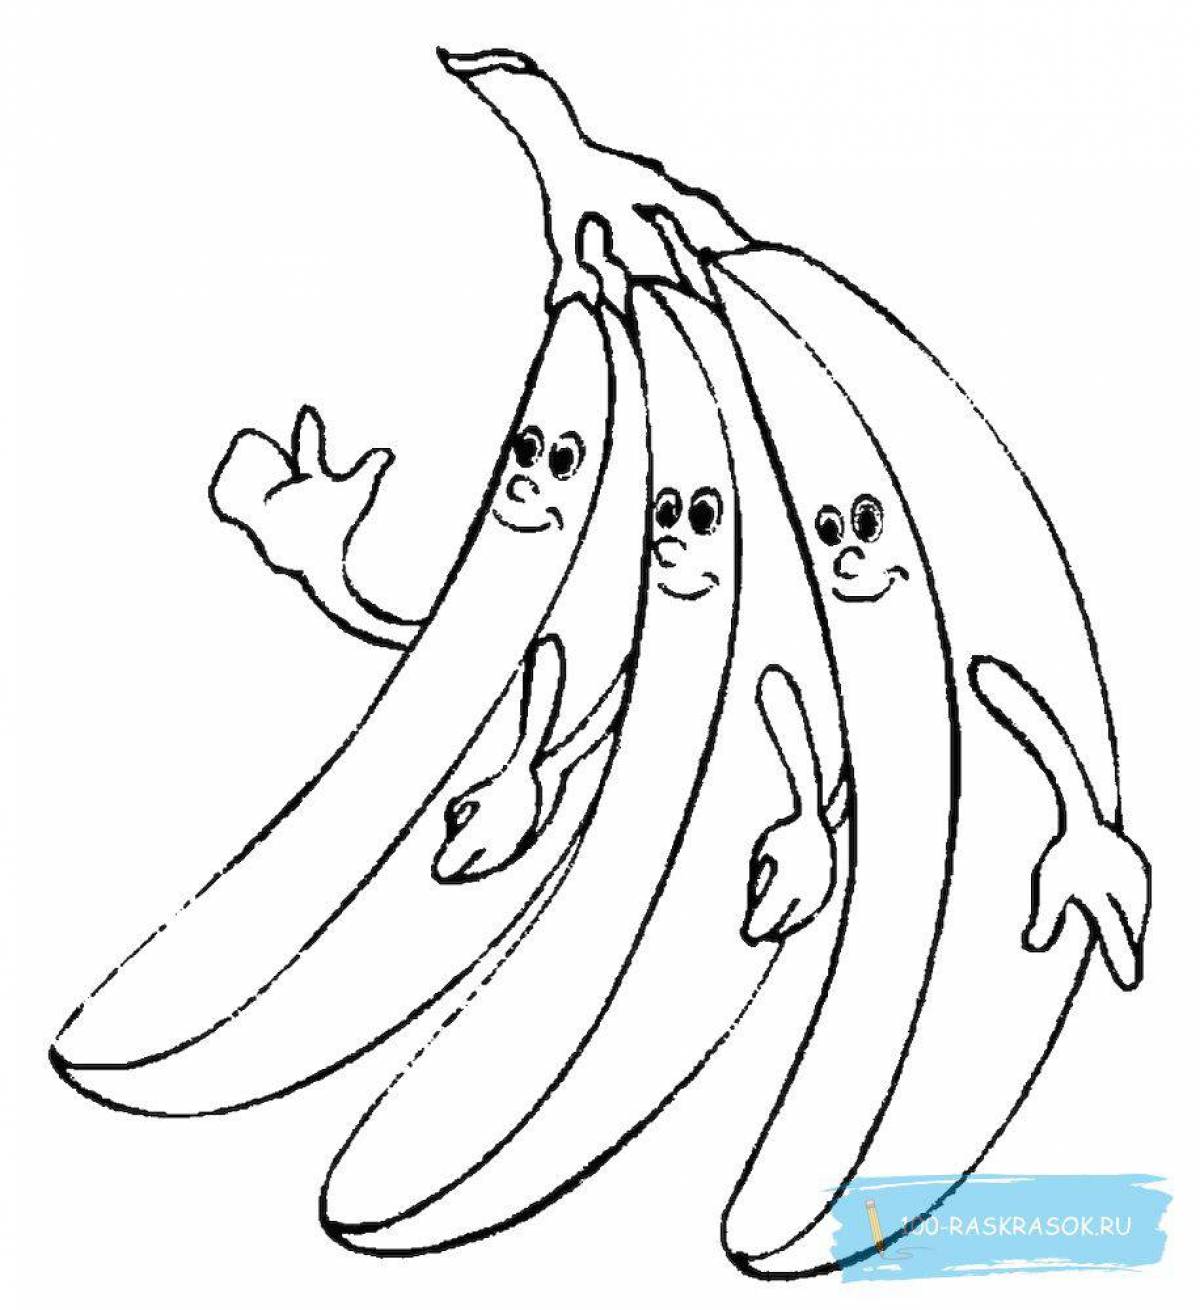 Bright banana coloring book for kids